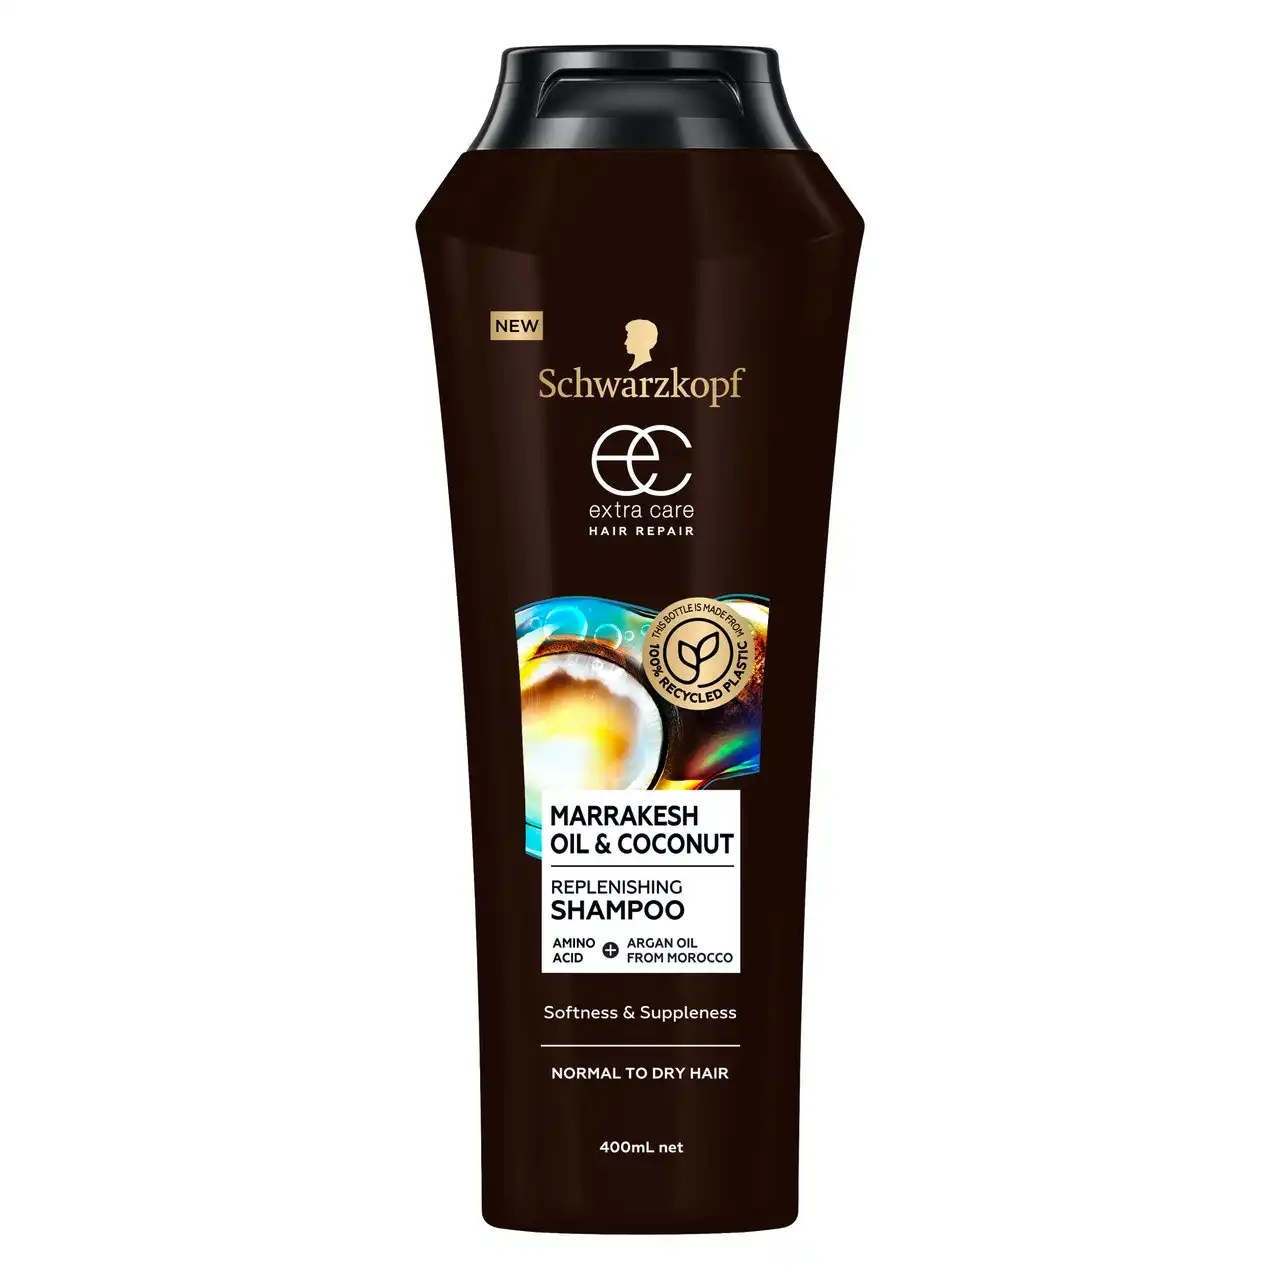 Schwarzkopf Extra Care Marrakesh Oil & Coconut Replenishing Shampoo 400mL